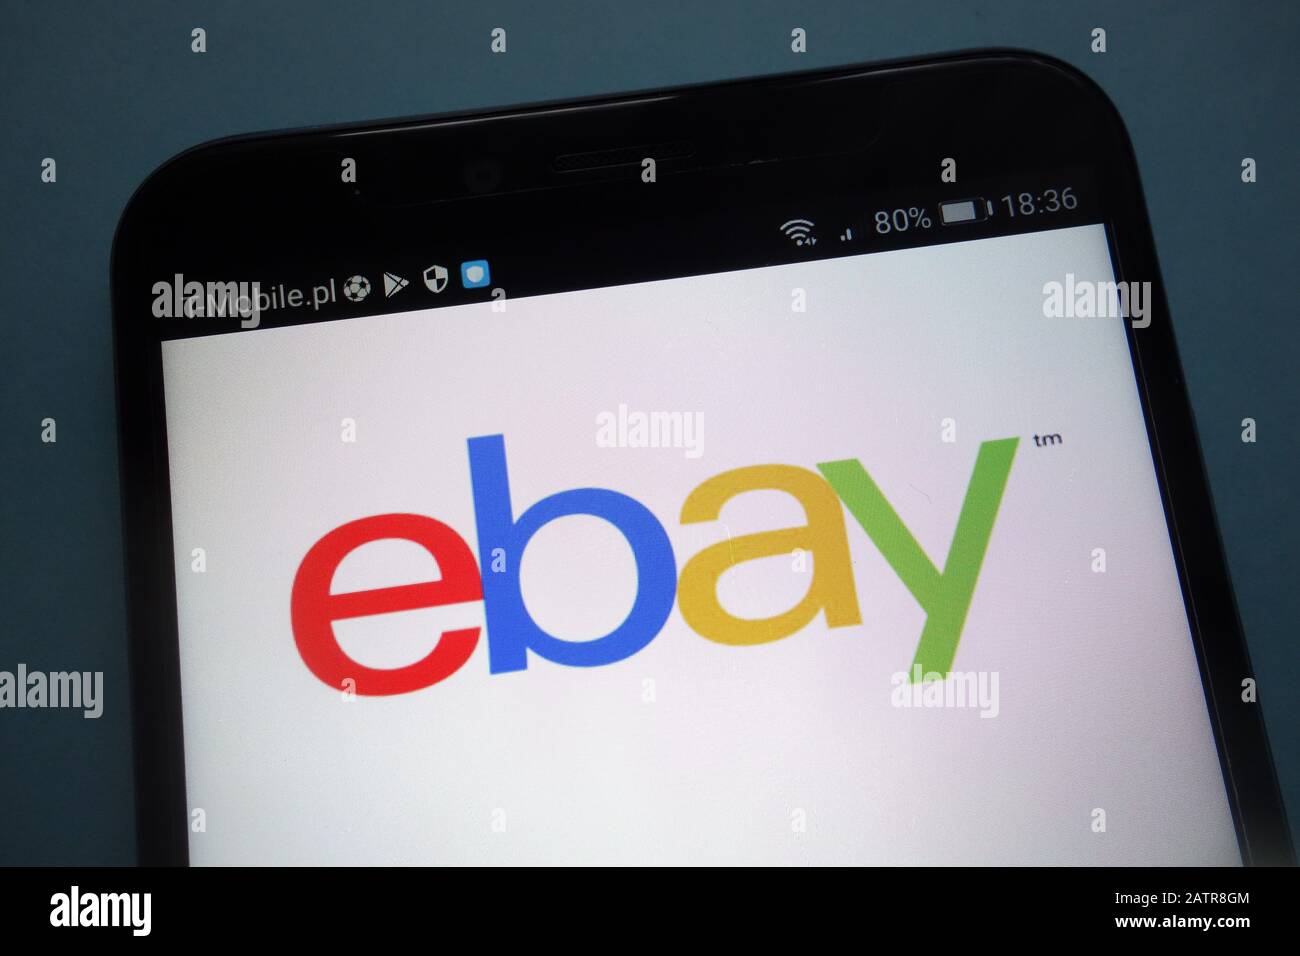 Ebay logo on smartphone Stock Photo